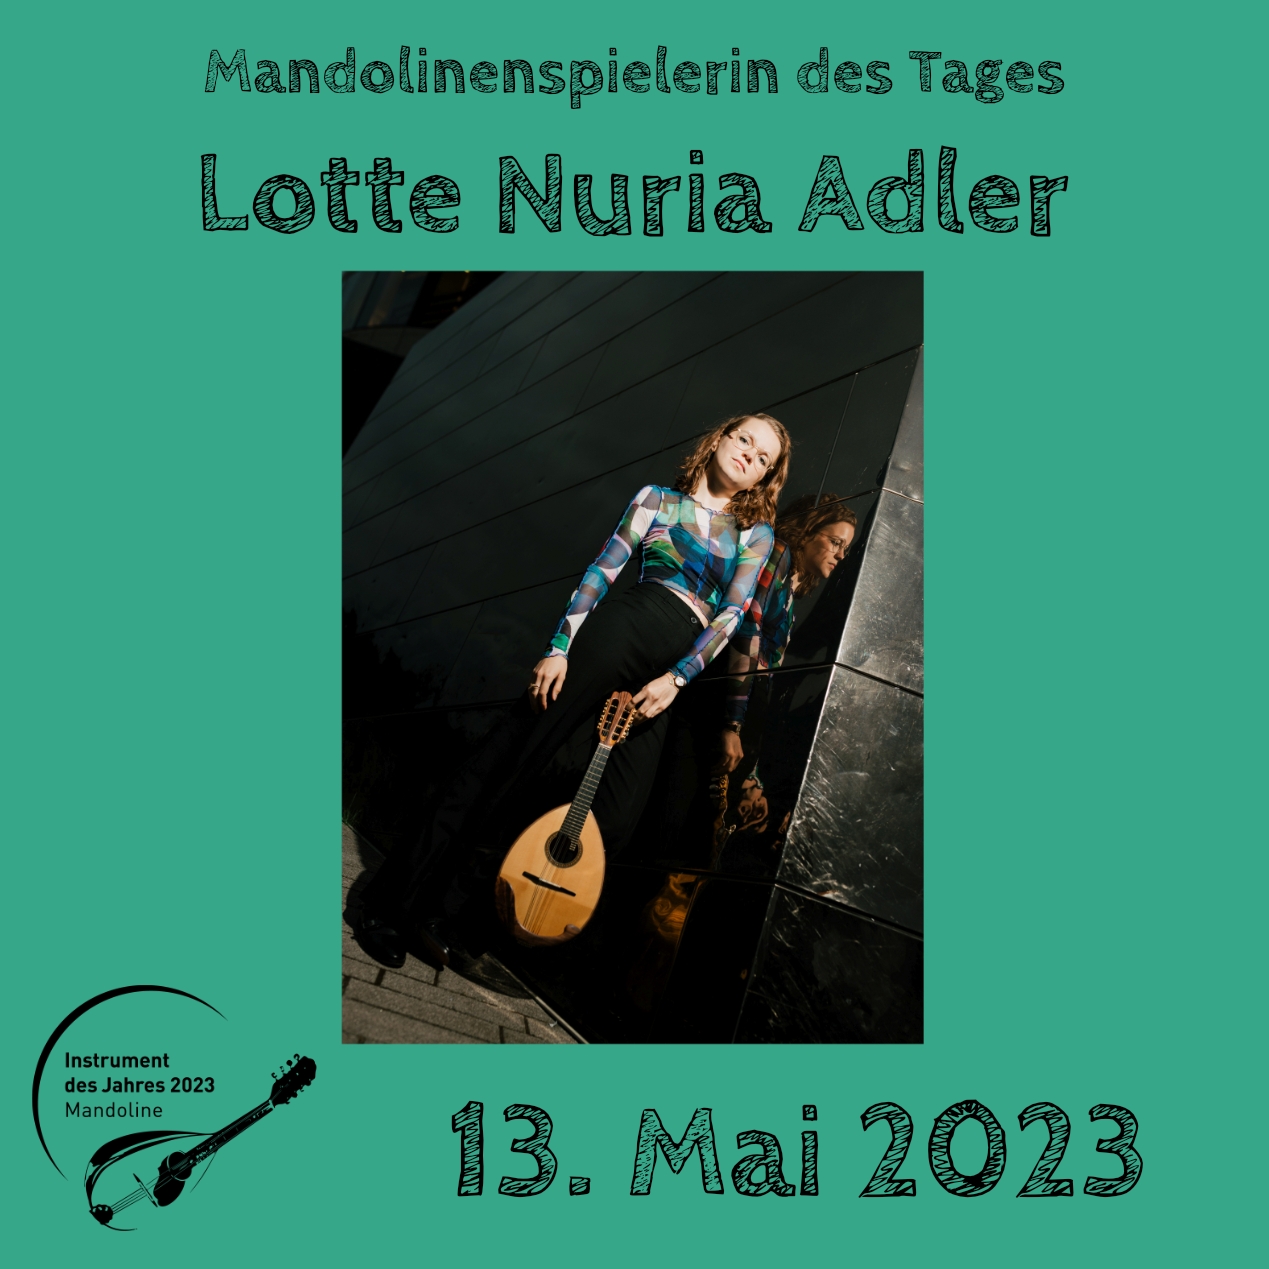 Lotte Nuria Adler Mandoline Instrument des Jahres 2023 Mandolinenspieler Mandolinenspielerin des Tages